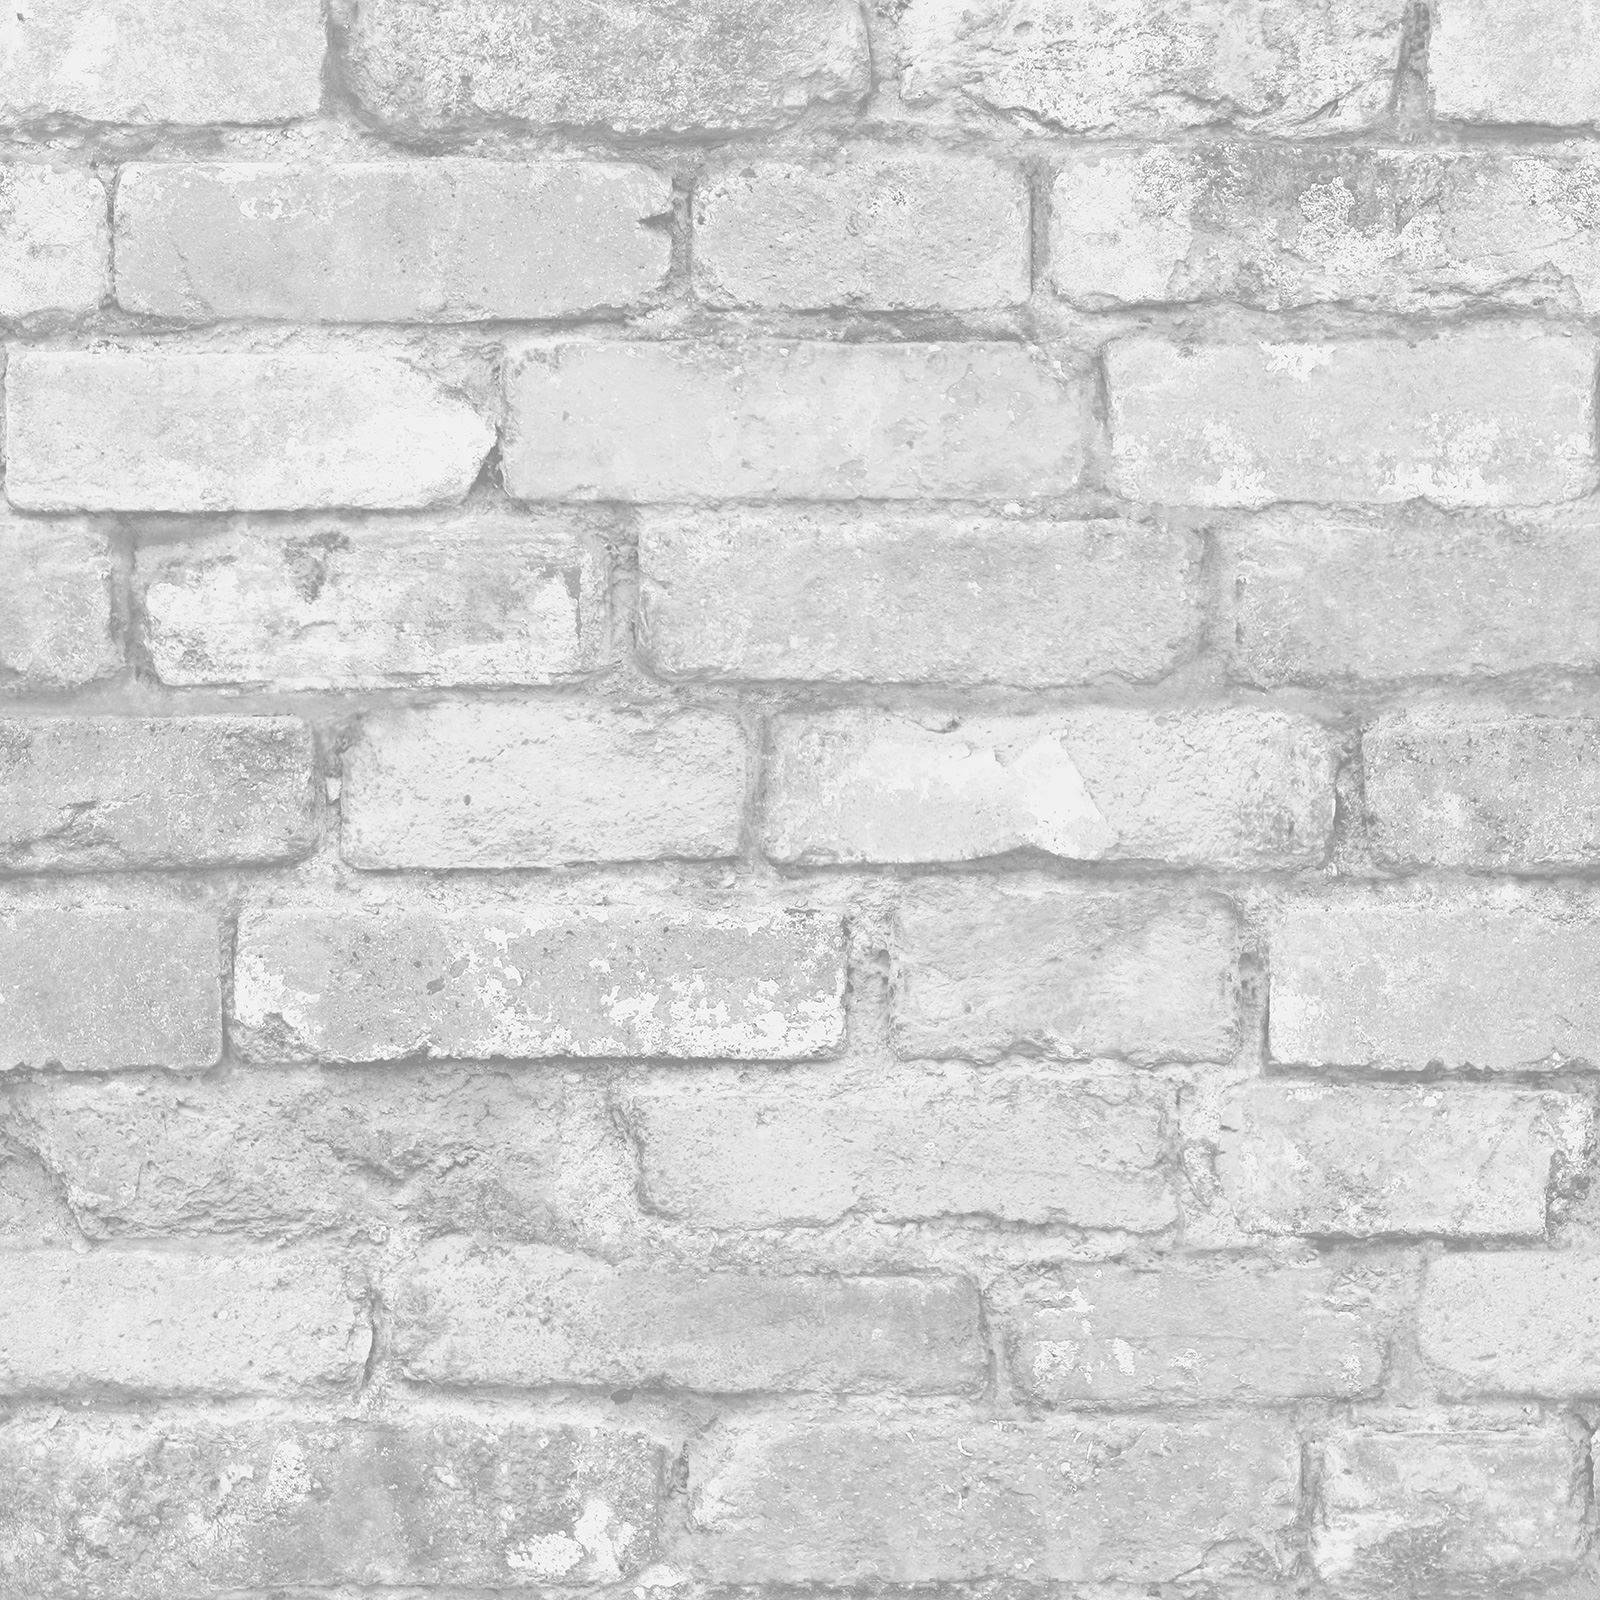 Distressed White Brick Background